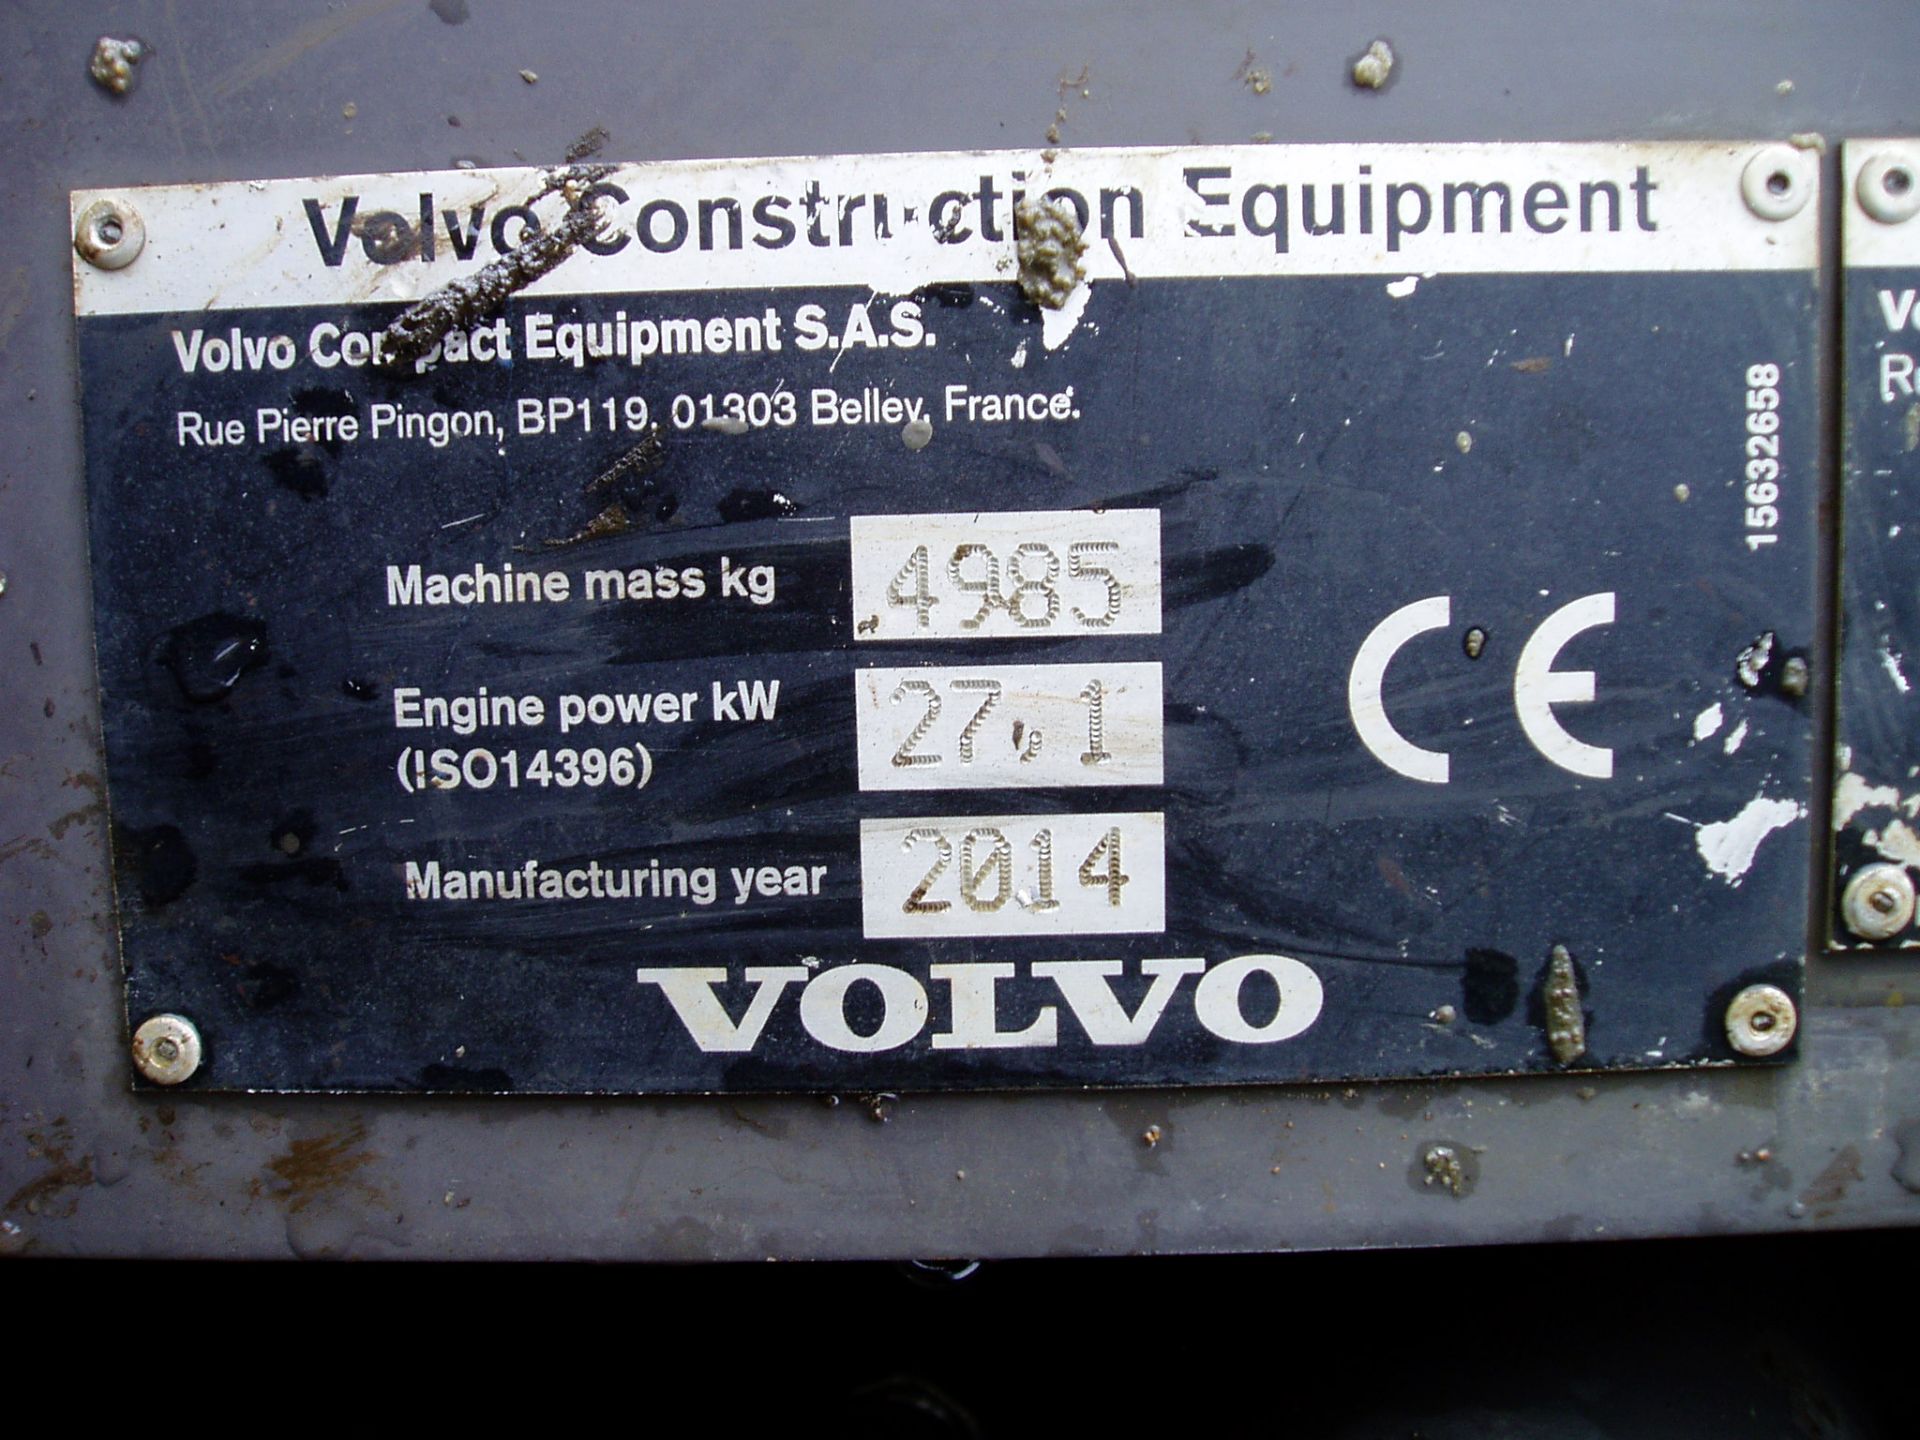 Volvo ECR48C 4850Kgs Reduced Tail Swing Midi Excavator - Image 17 of 22